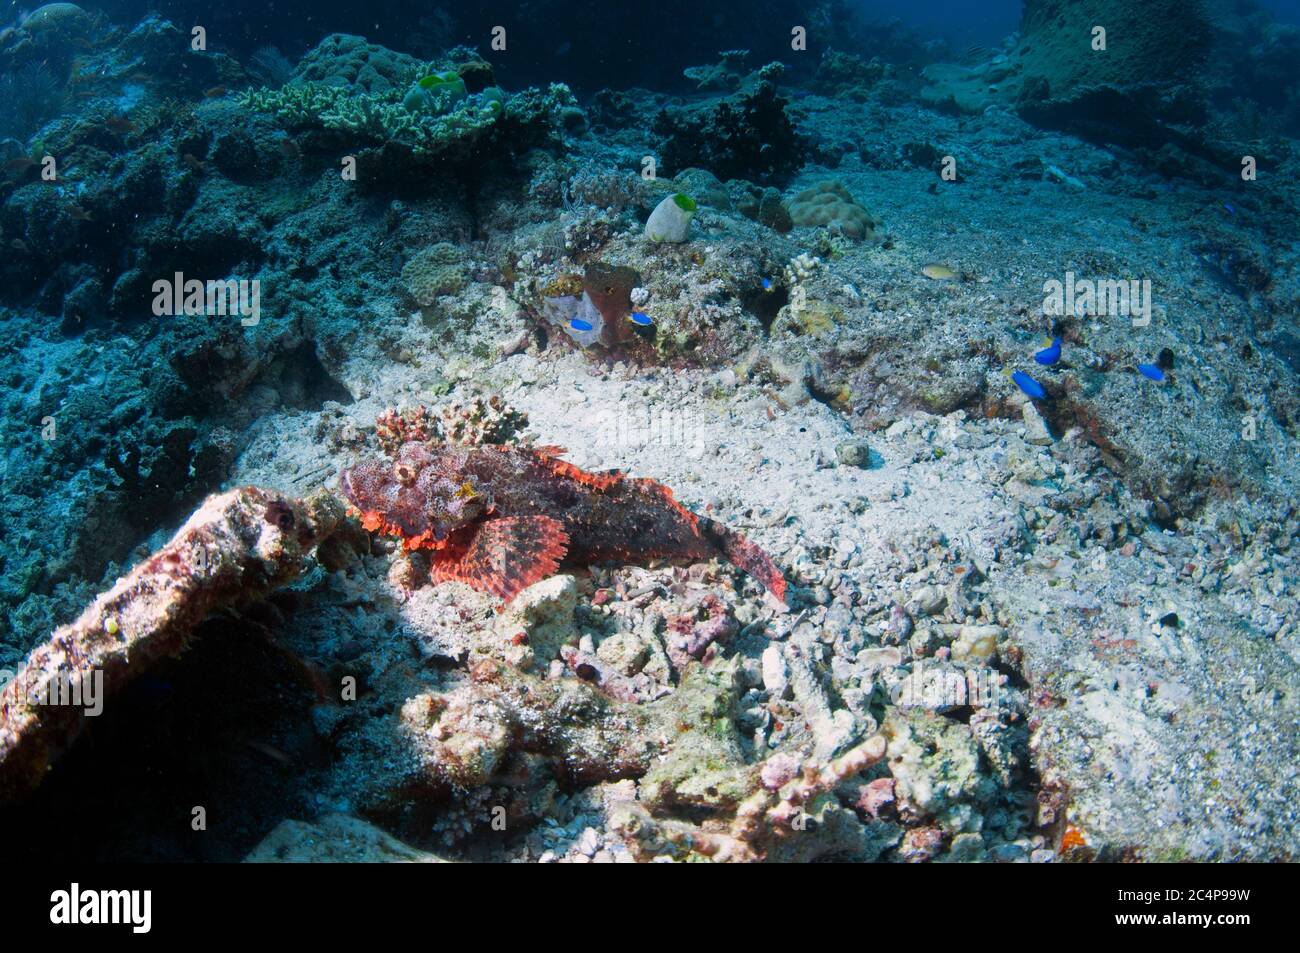 Tasseled scorpionfish, Scorpaenopsis oxycephala, on coral rubble, Komodo National Park, Indonesia Stock Photo